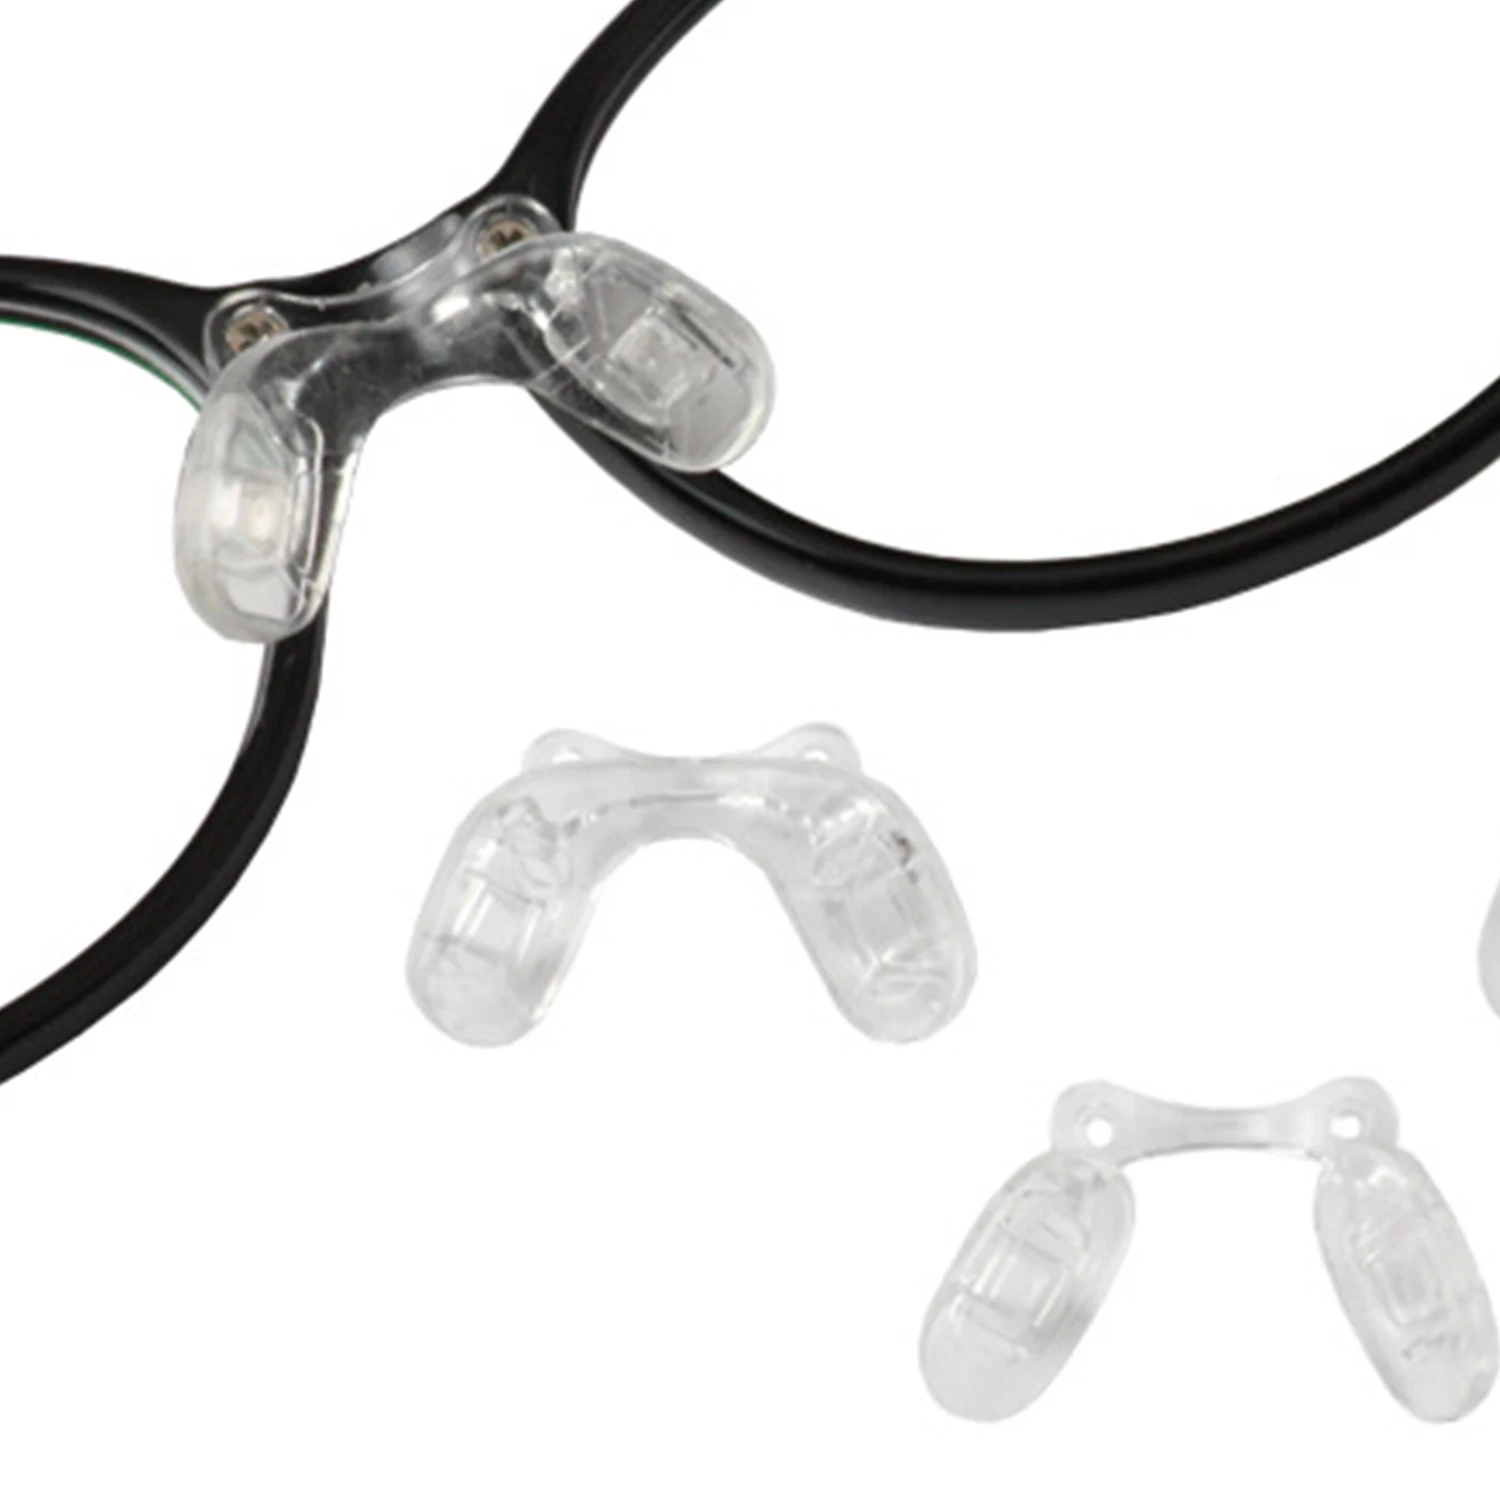 

Eyeglasses Saddle Bridge Glasses Bridge Strap Nose Pads Soft Silicone Anti-Slip Nosepads Screw-in For Glasses Accessories